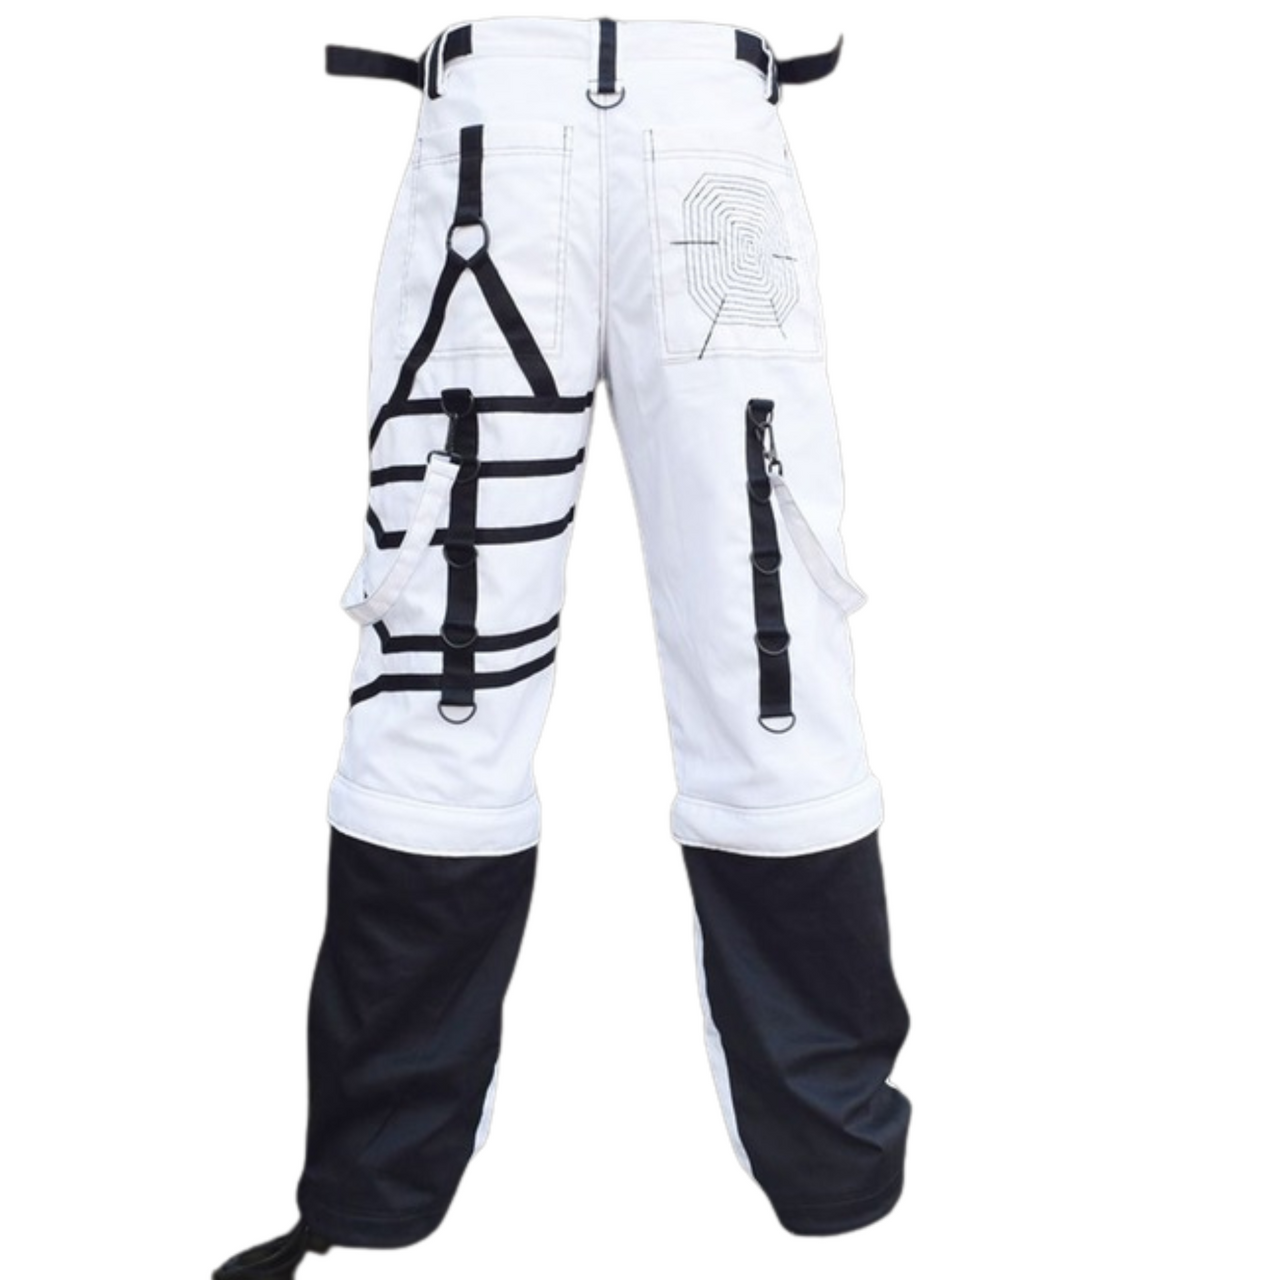 White & Black Men's Gothic Trouser Cyber Punk Gothic Baggy Trouser Pant